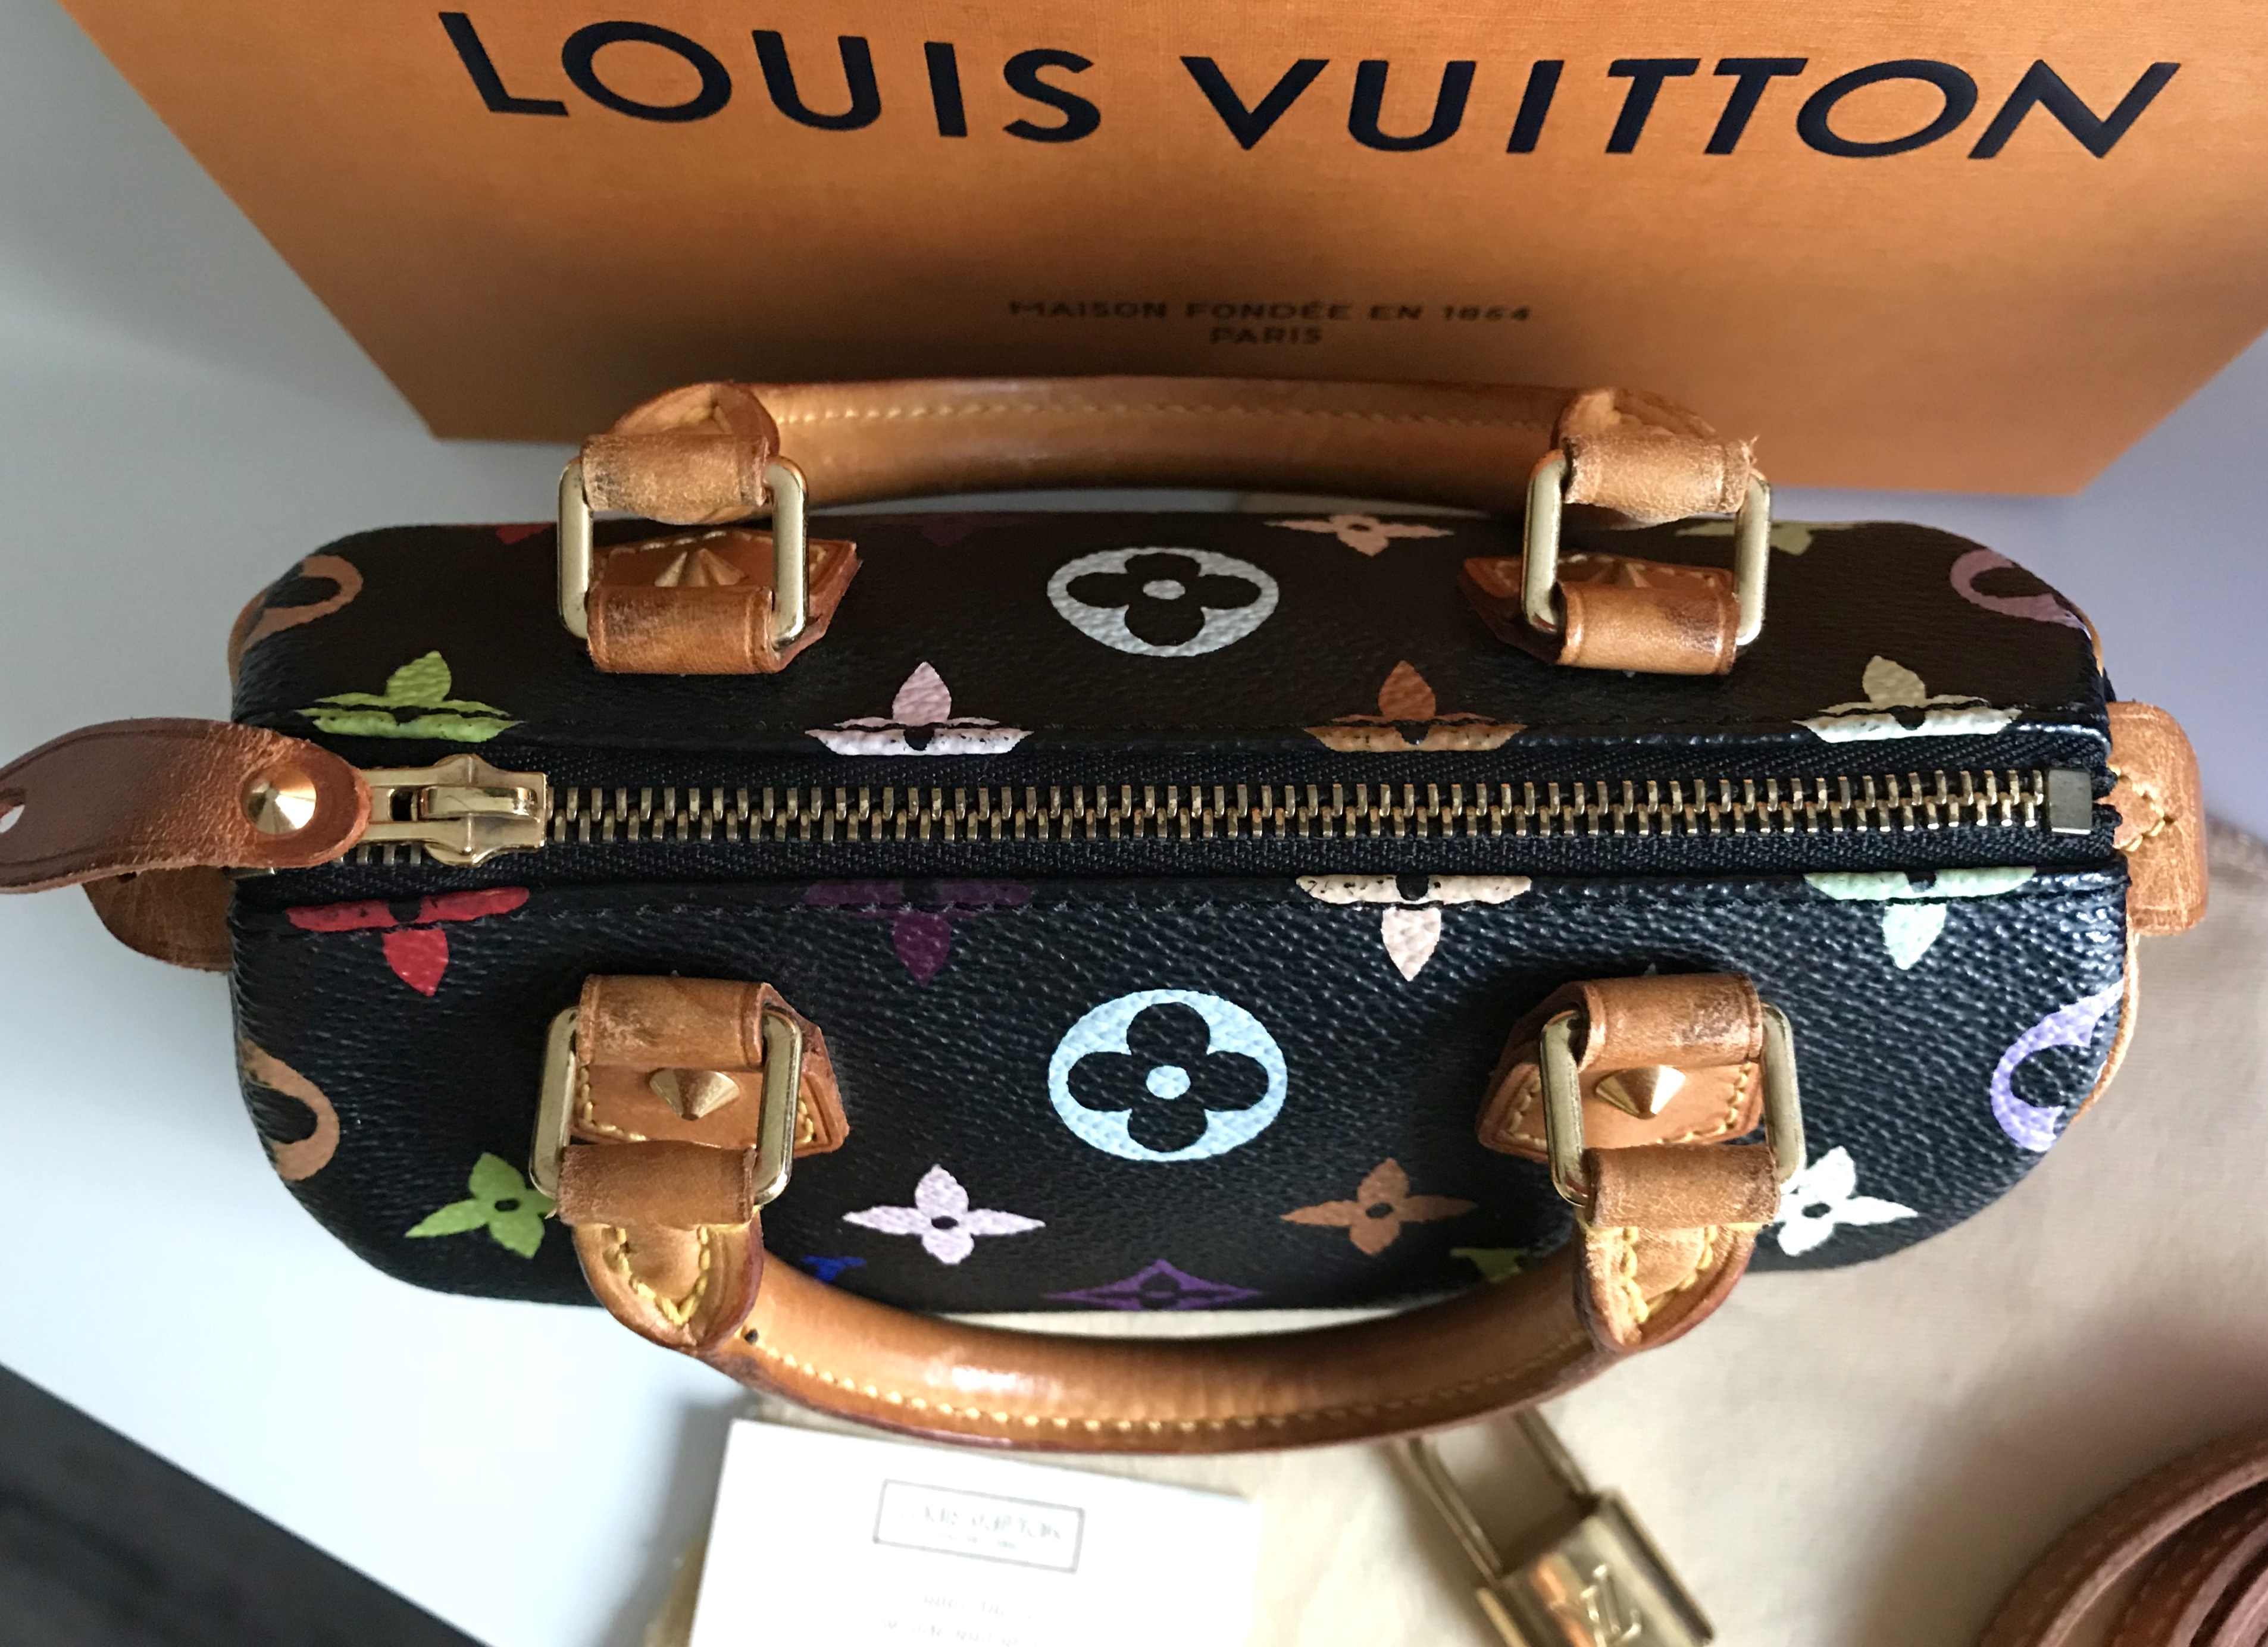 Louis Vuitton Mini Speedy 2way Bag in Black